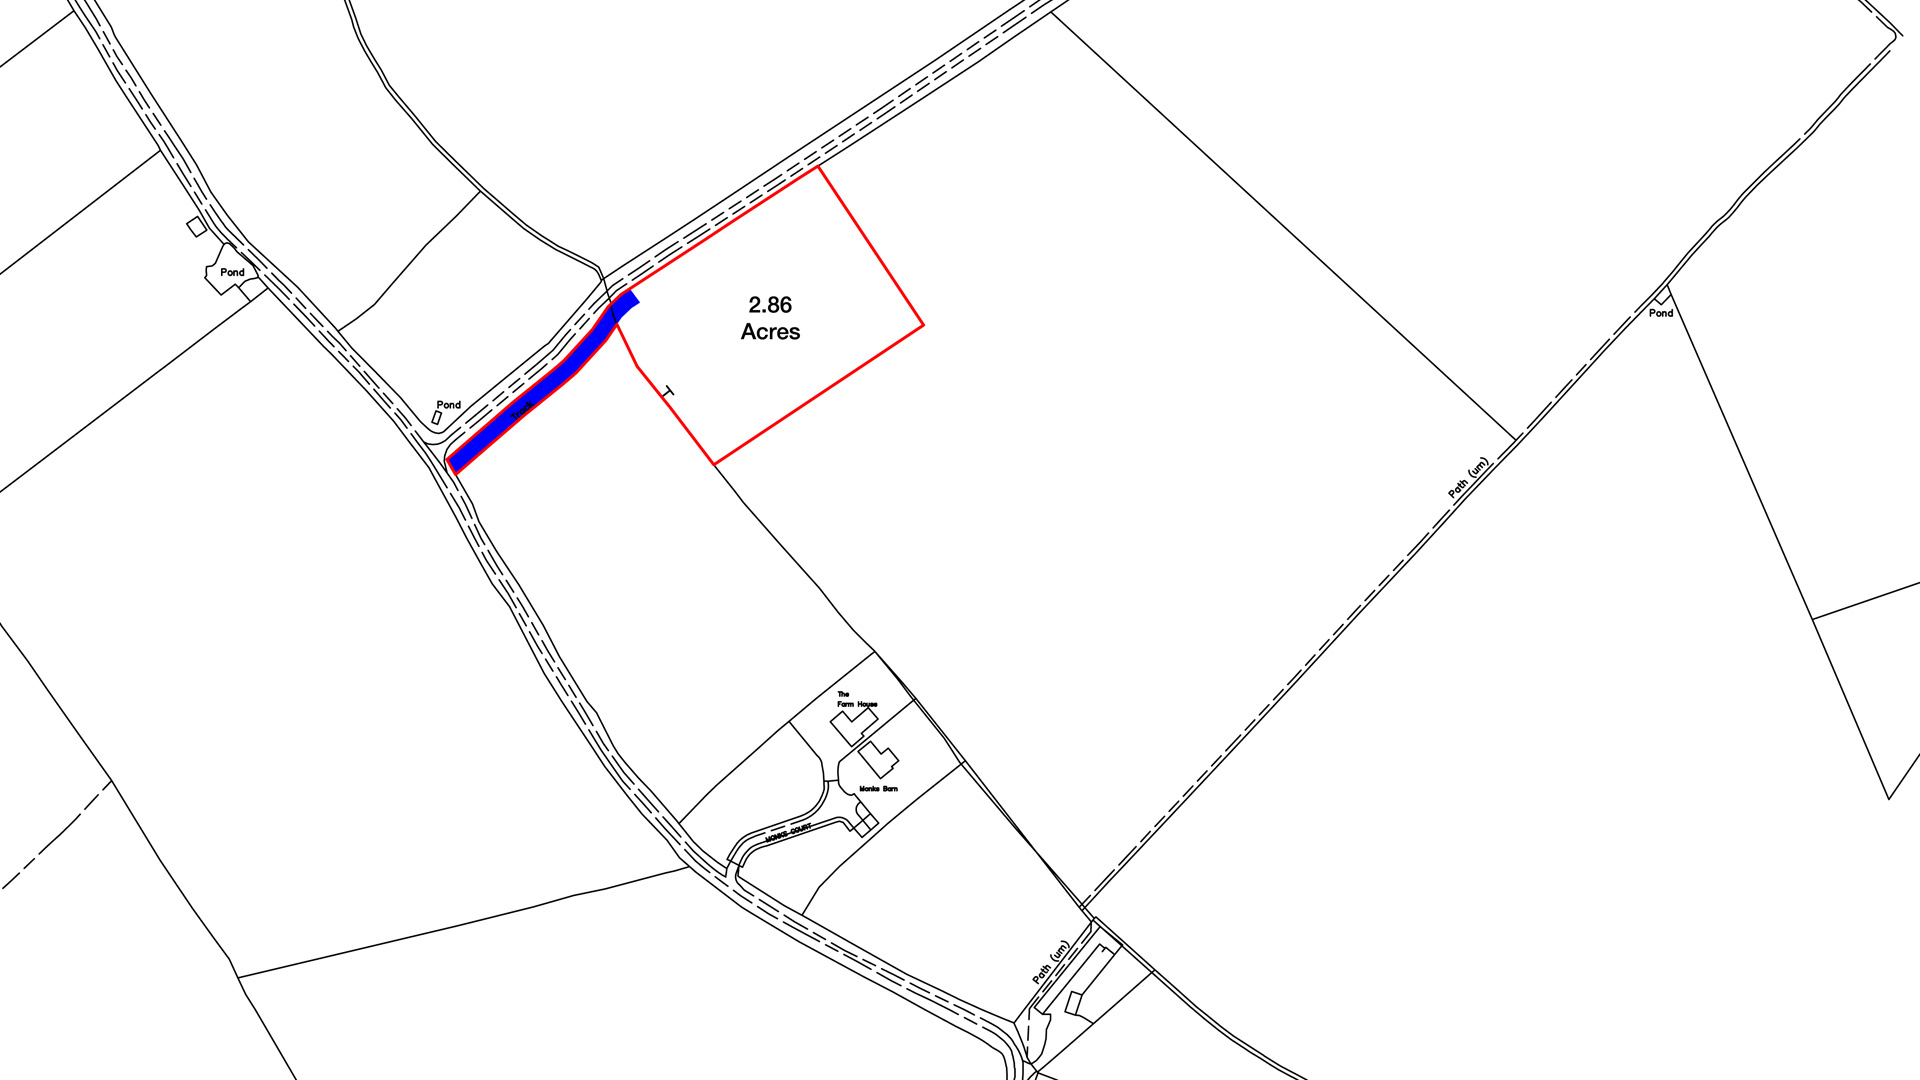 Land for sale in Puttenham, Tring site plan